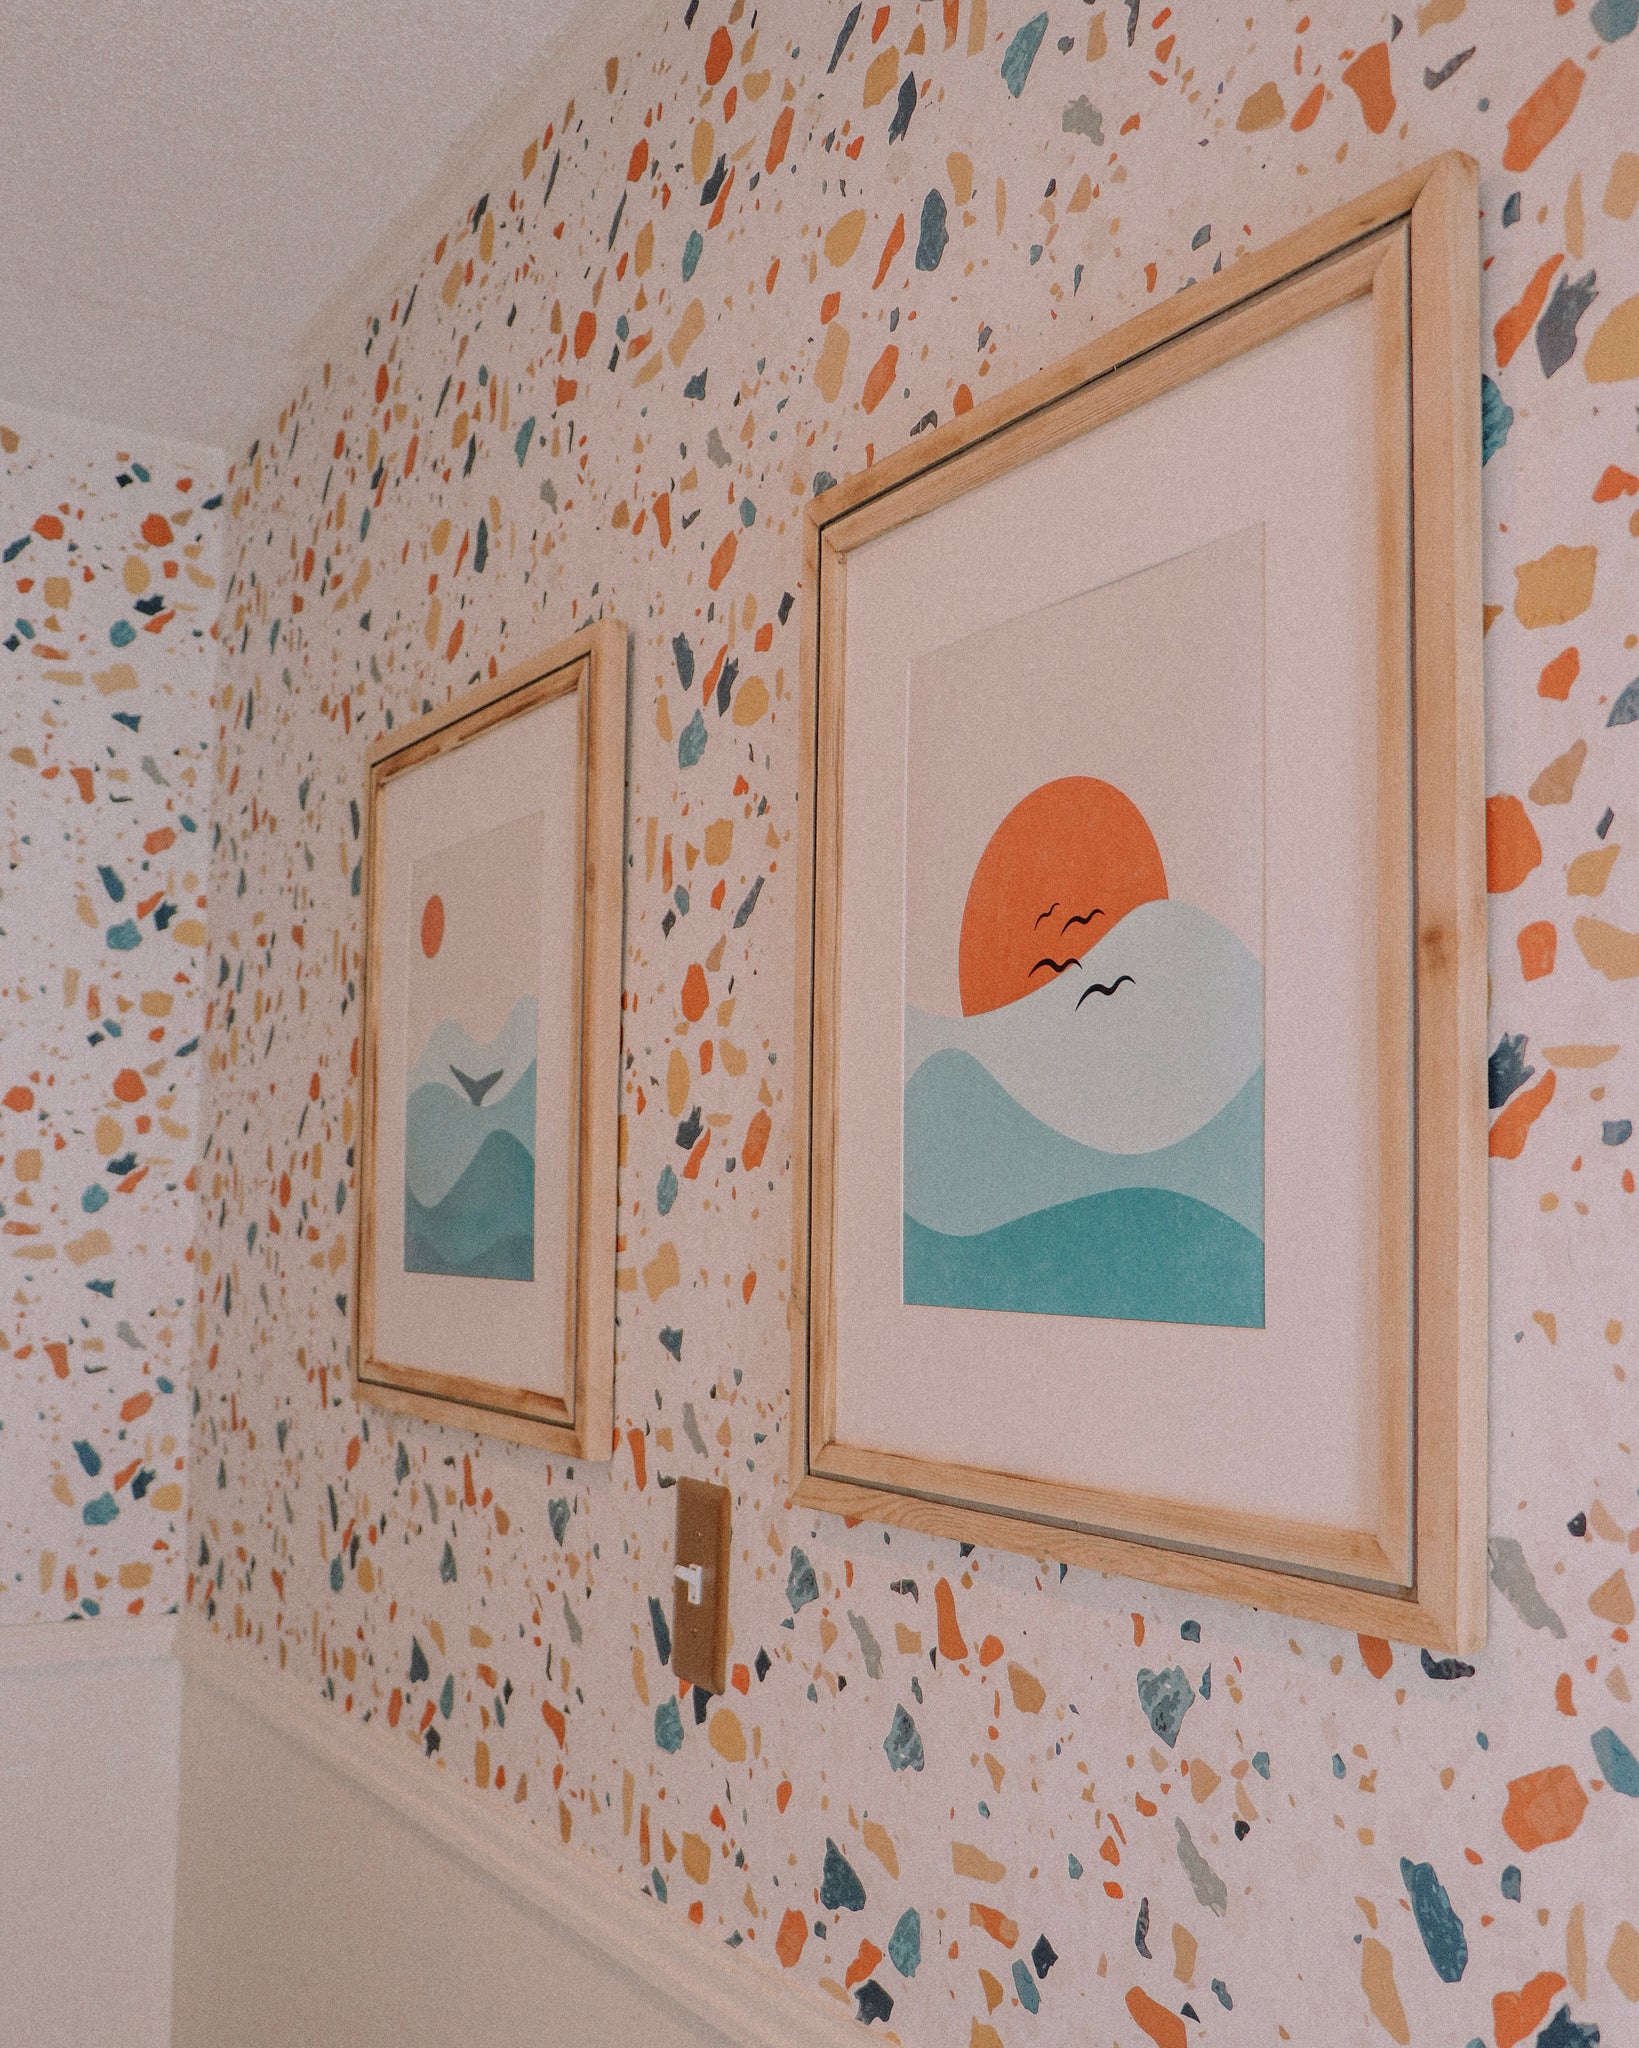 Terrazzo pattern wallpaper design installed in bathroom interior